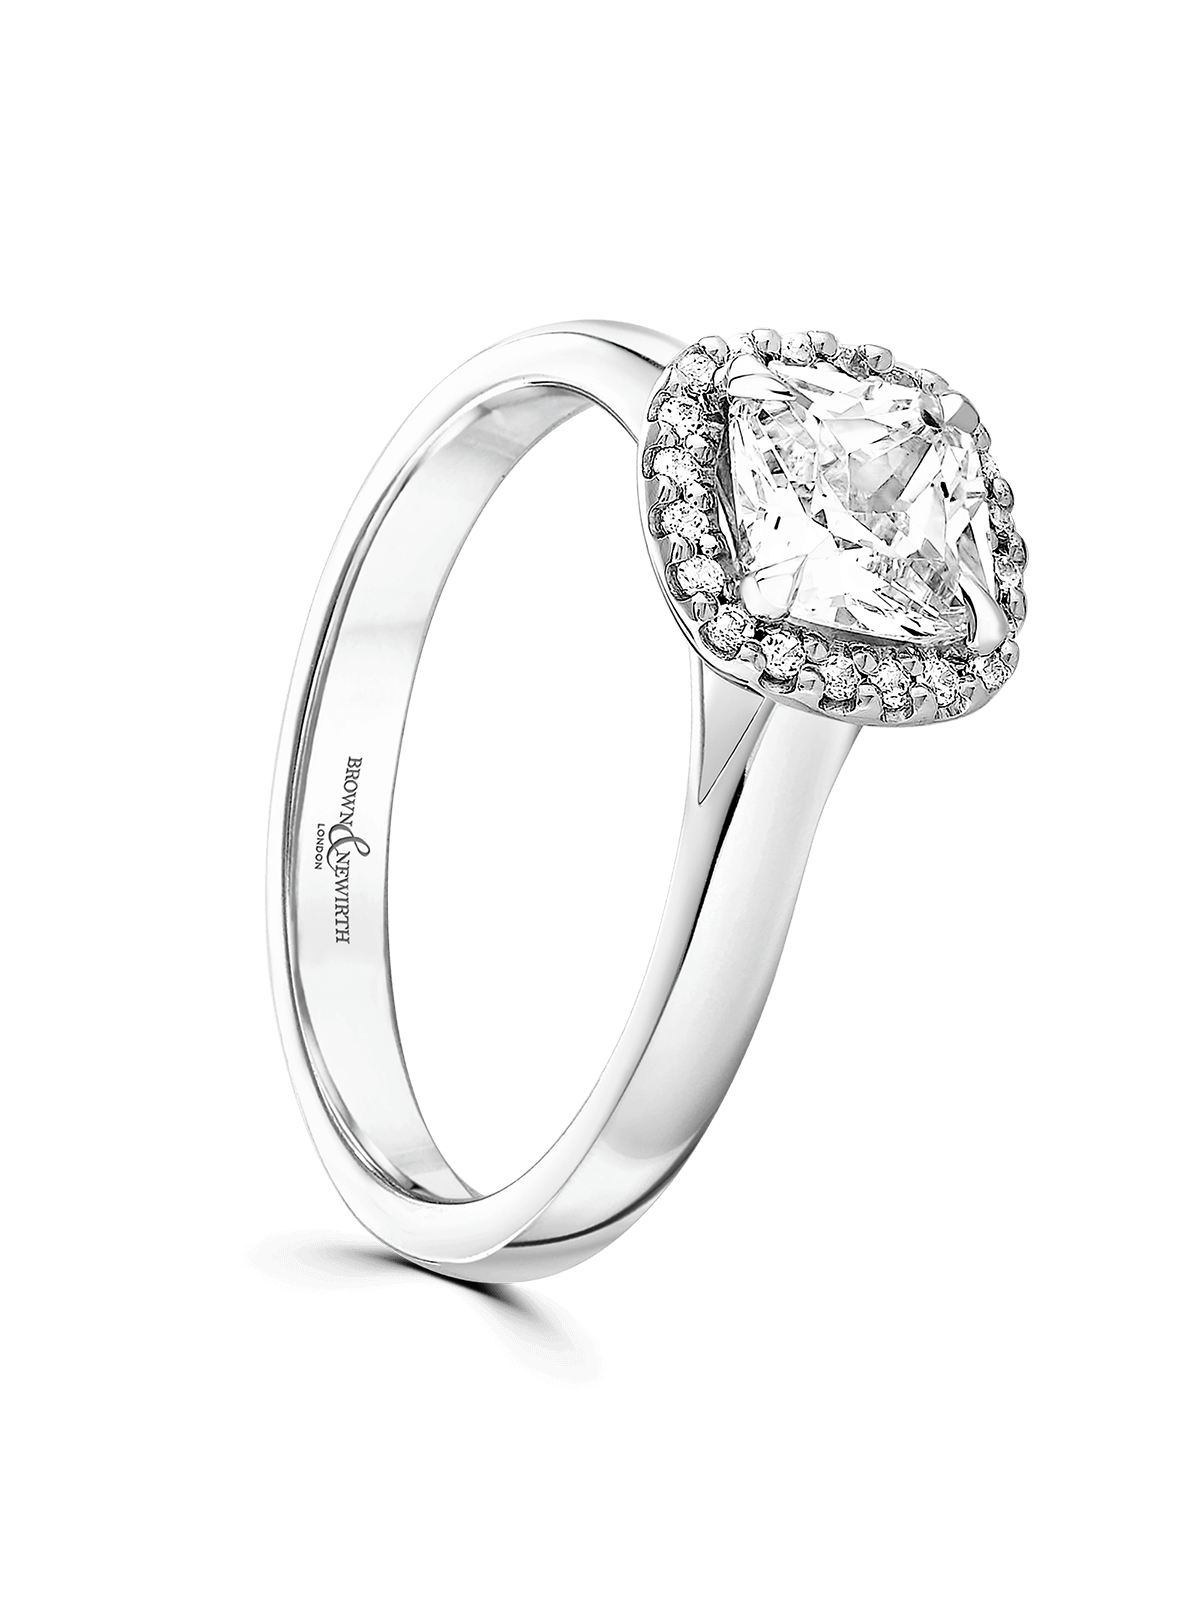 Brown & Newirth Nova 1.00ct Cushion Cut Certificated Diamond Halo Engagement Ring in Platinum